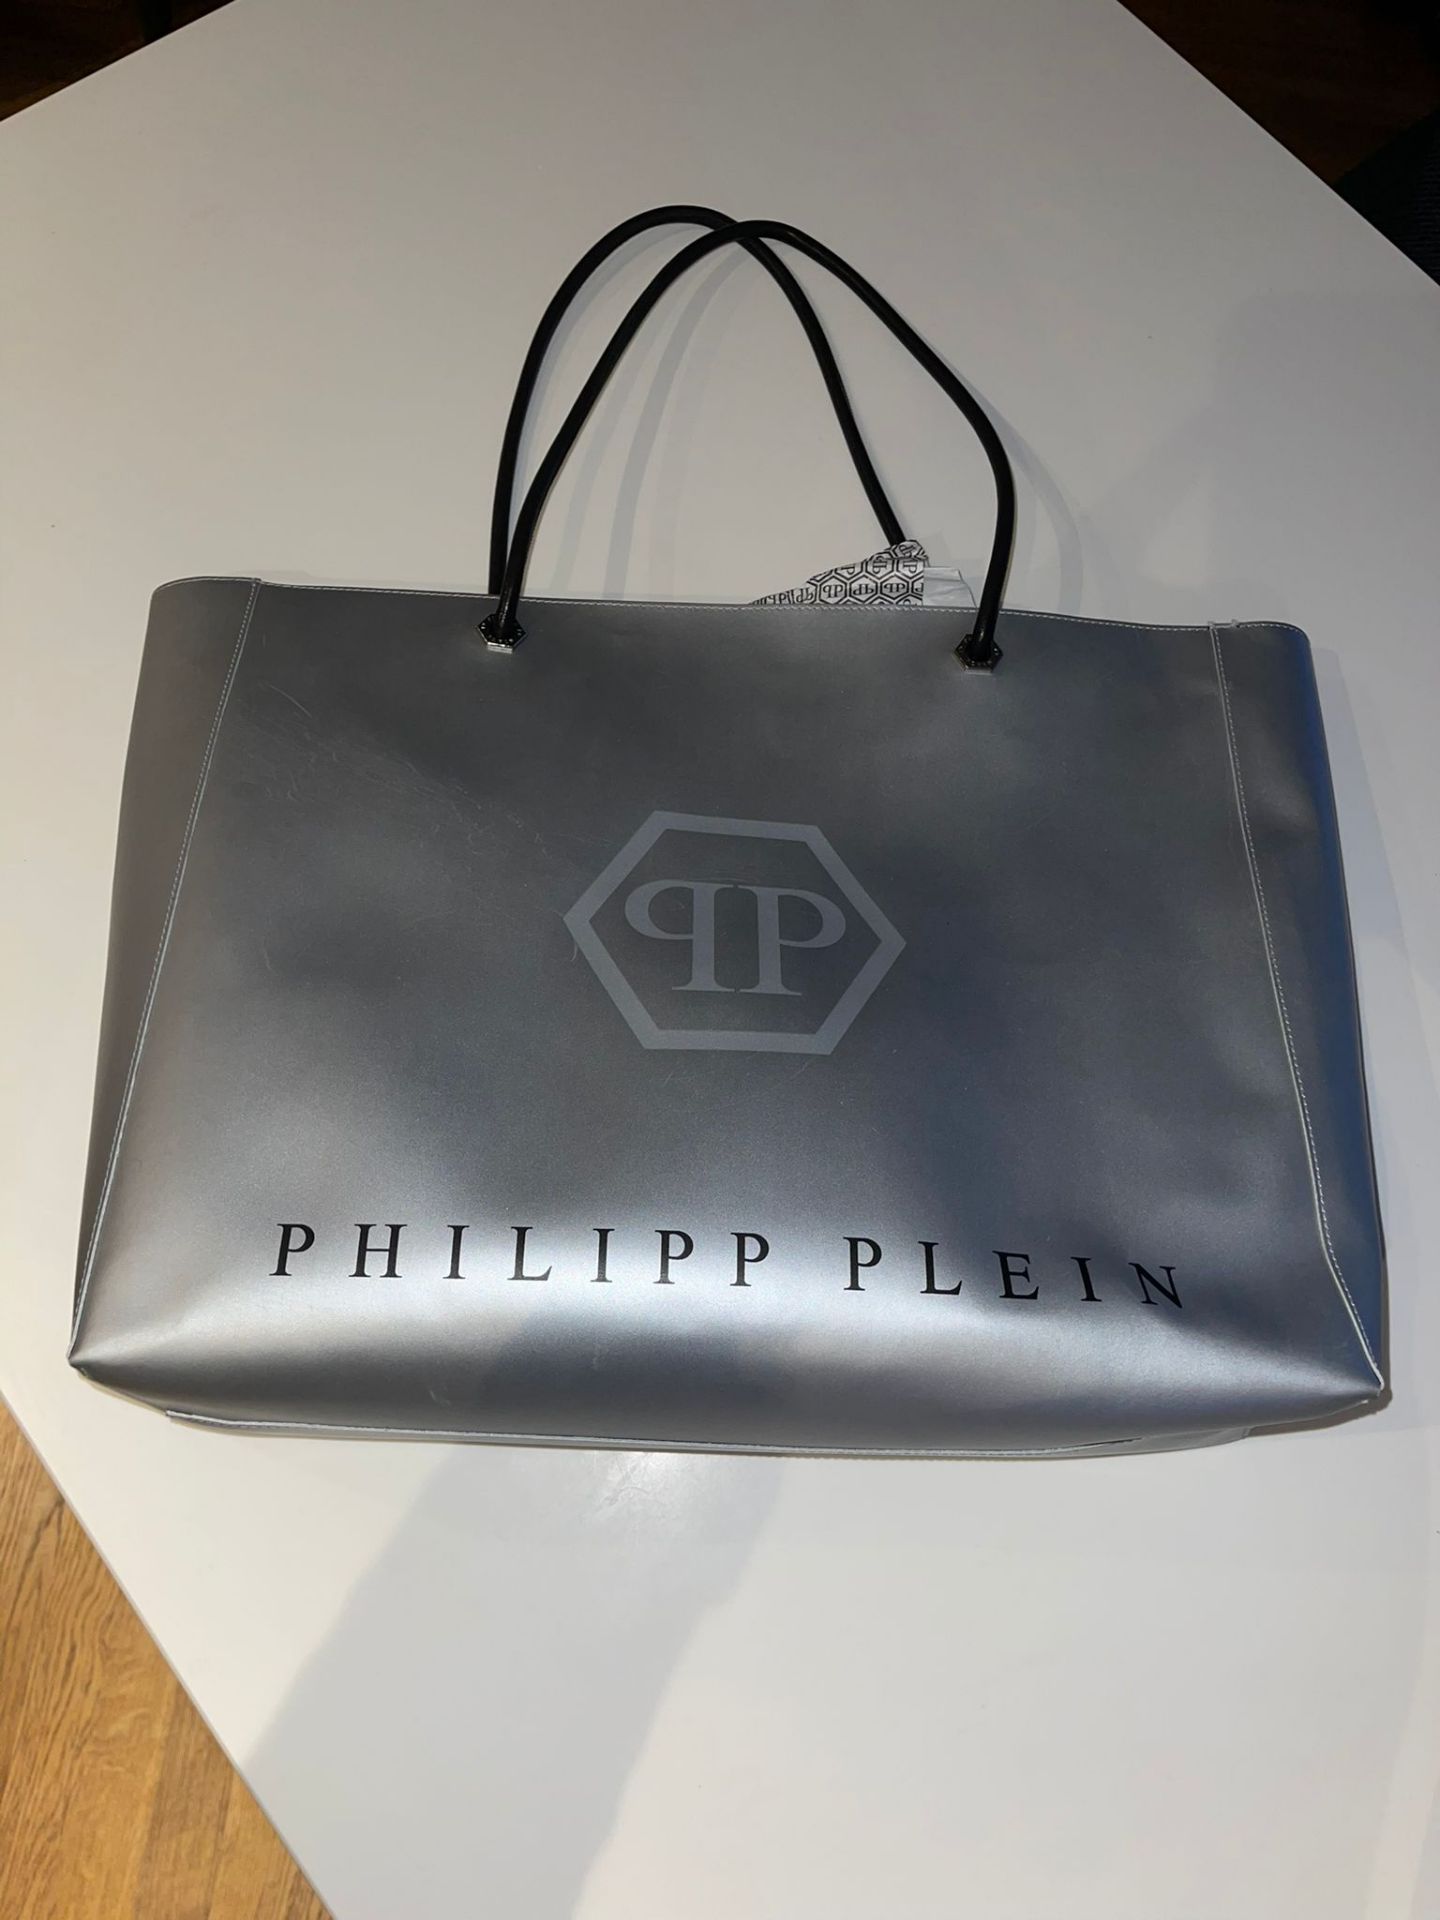 PHILIPP PLEIN. BRANDED SHOPPER BAG. Grey shopper bag from Philipp Plein. Made of calf leather. - Image 2 of 2